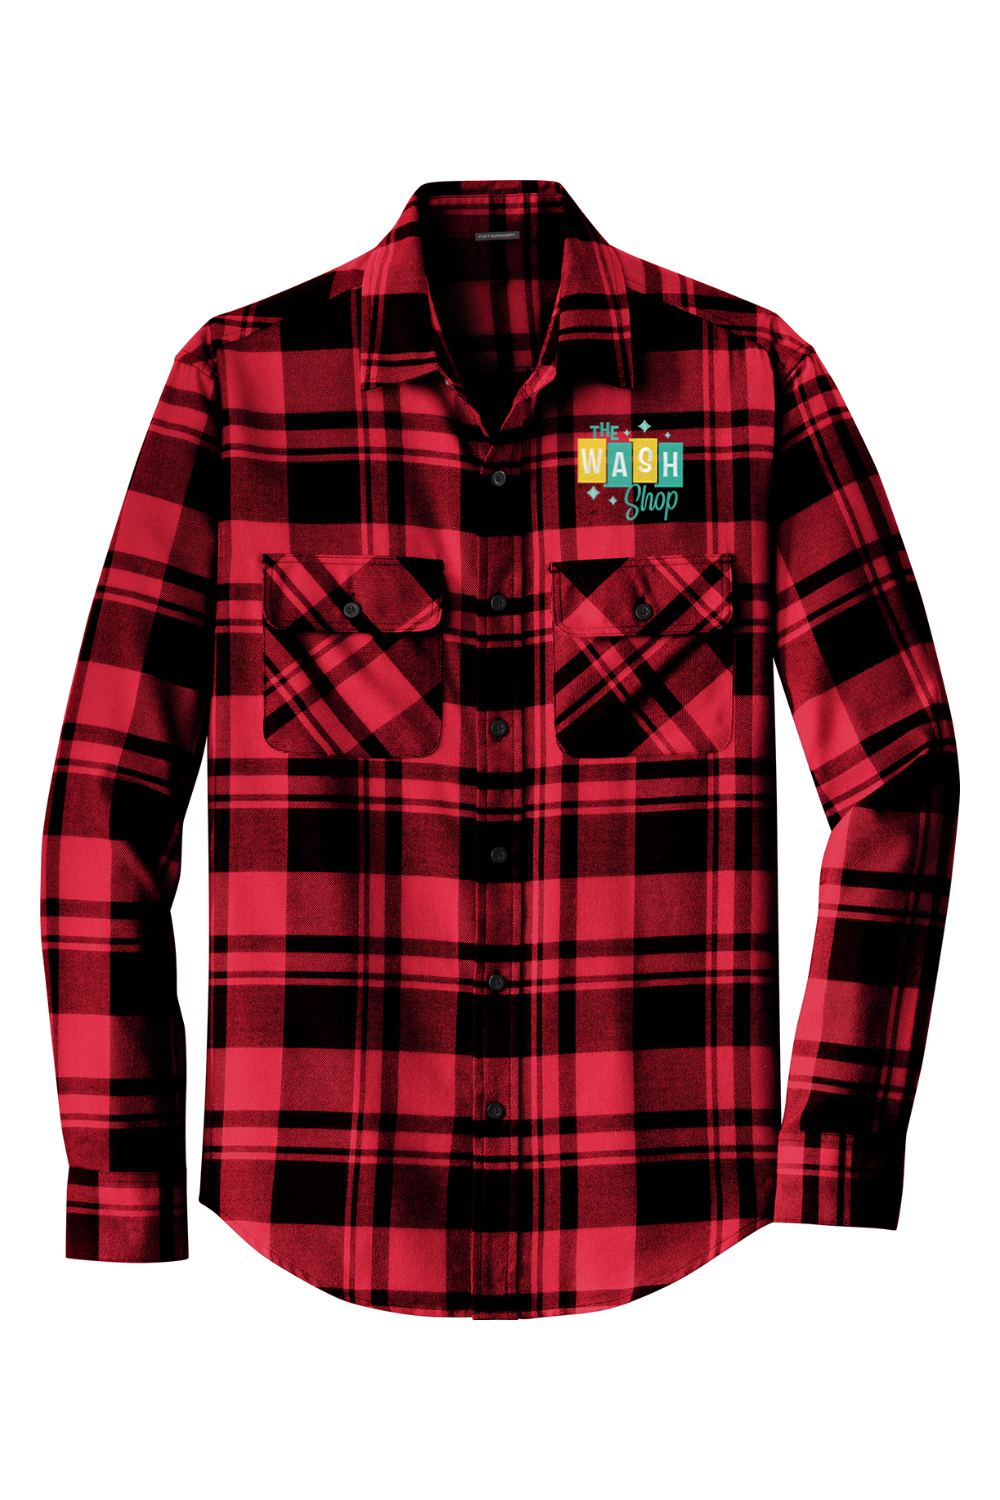 Plaid Flannel Shirt - The Wash Shop